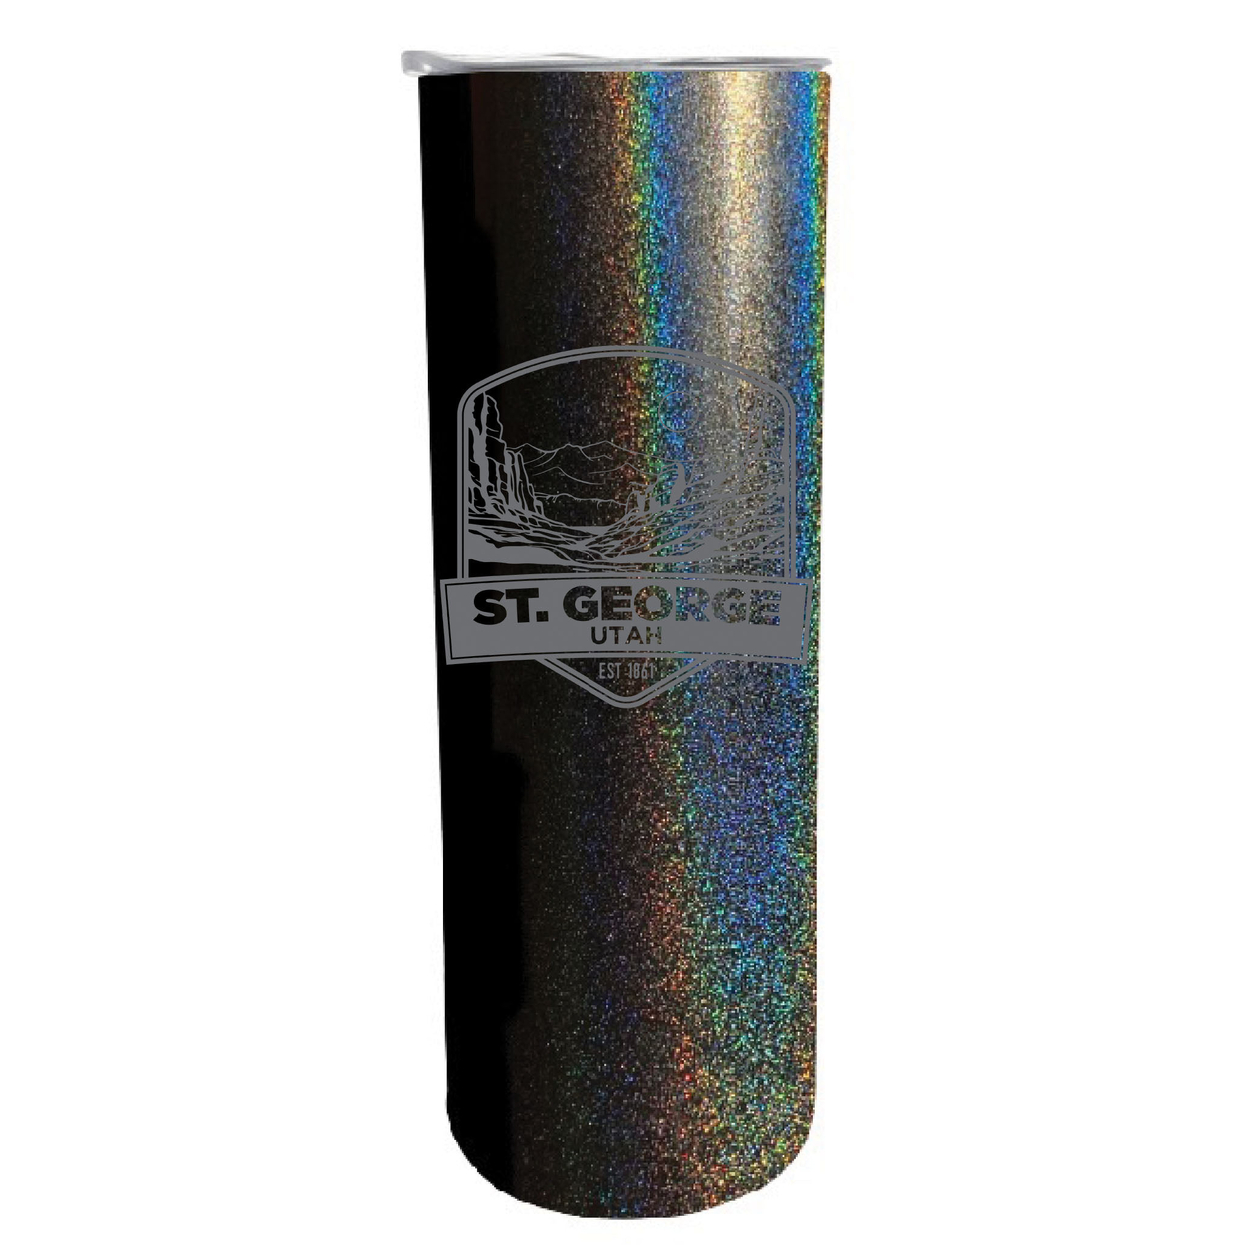 St. George Utah Souvenir 20 Oz Engraved Insulated Stainless Steel Skinny Tumbler - Black Glitter,,4-Pack